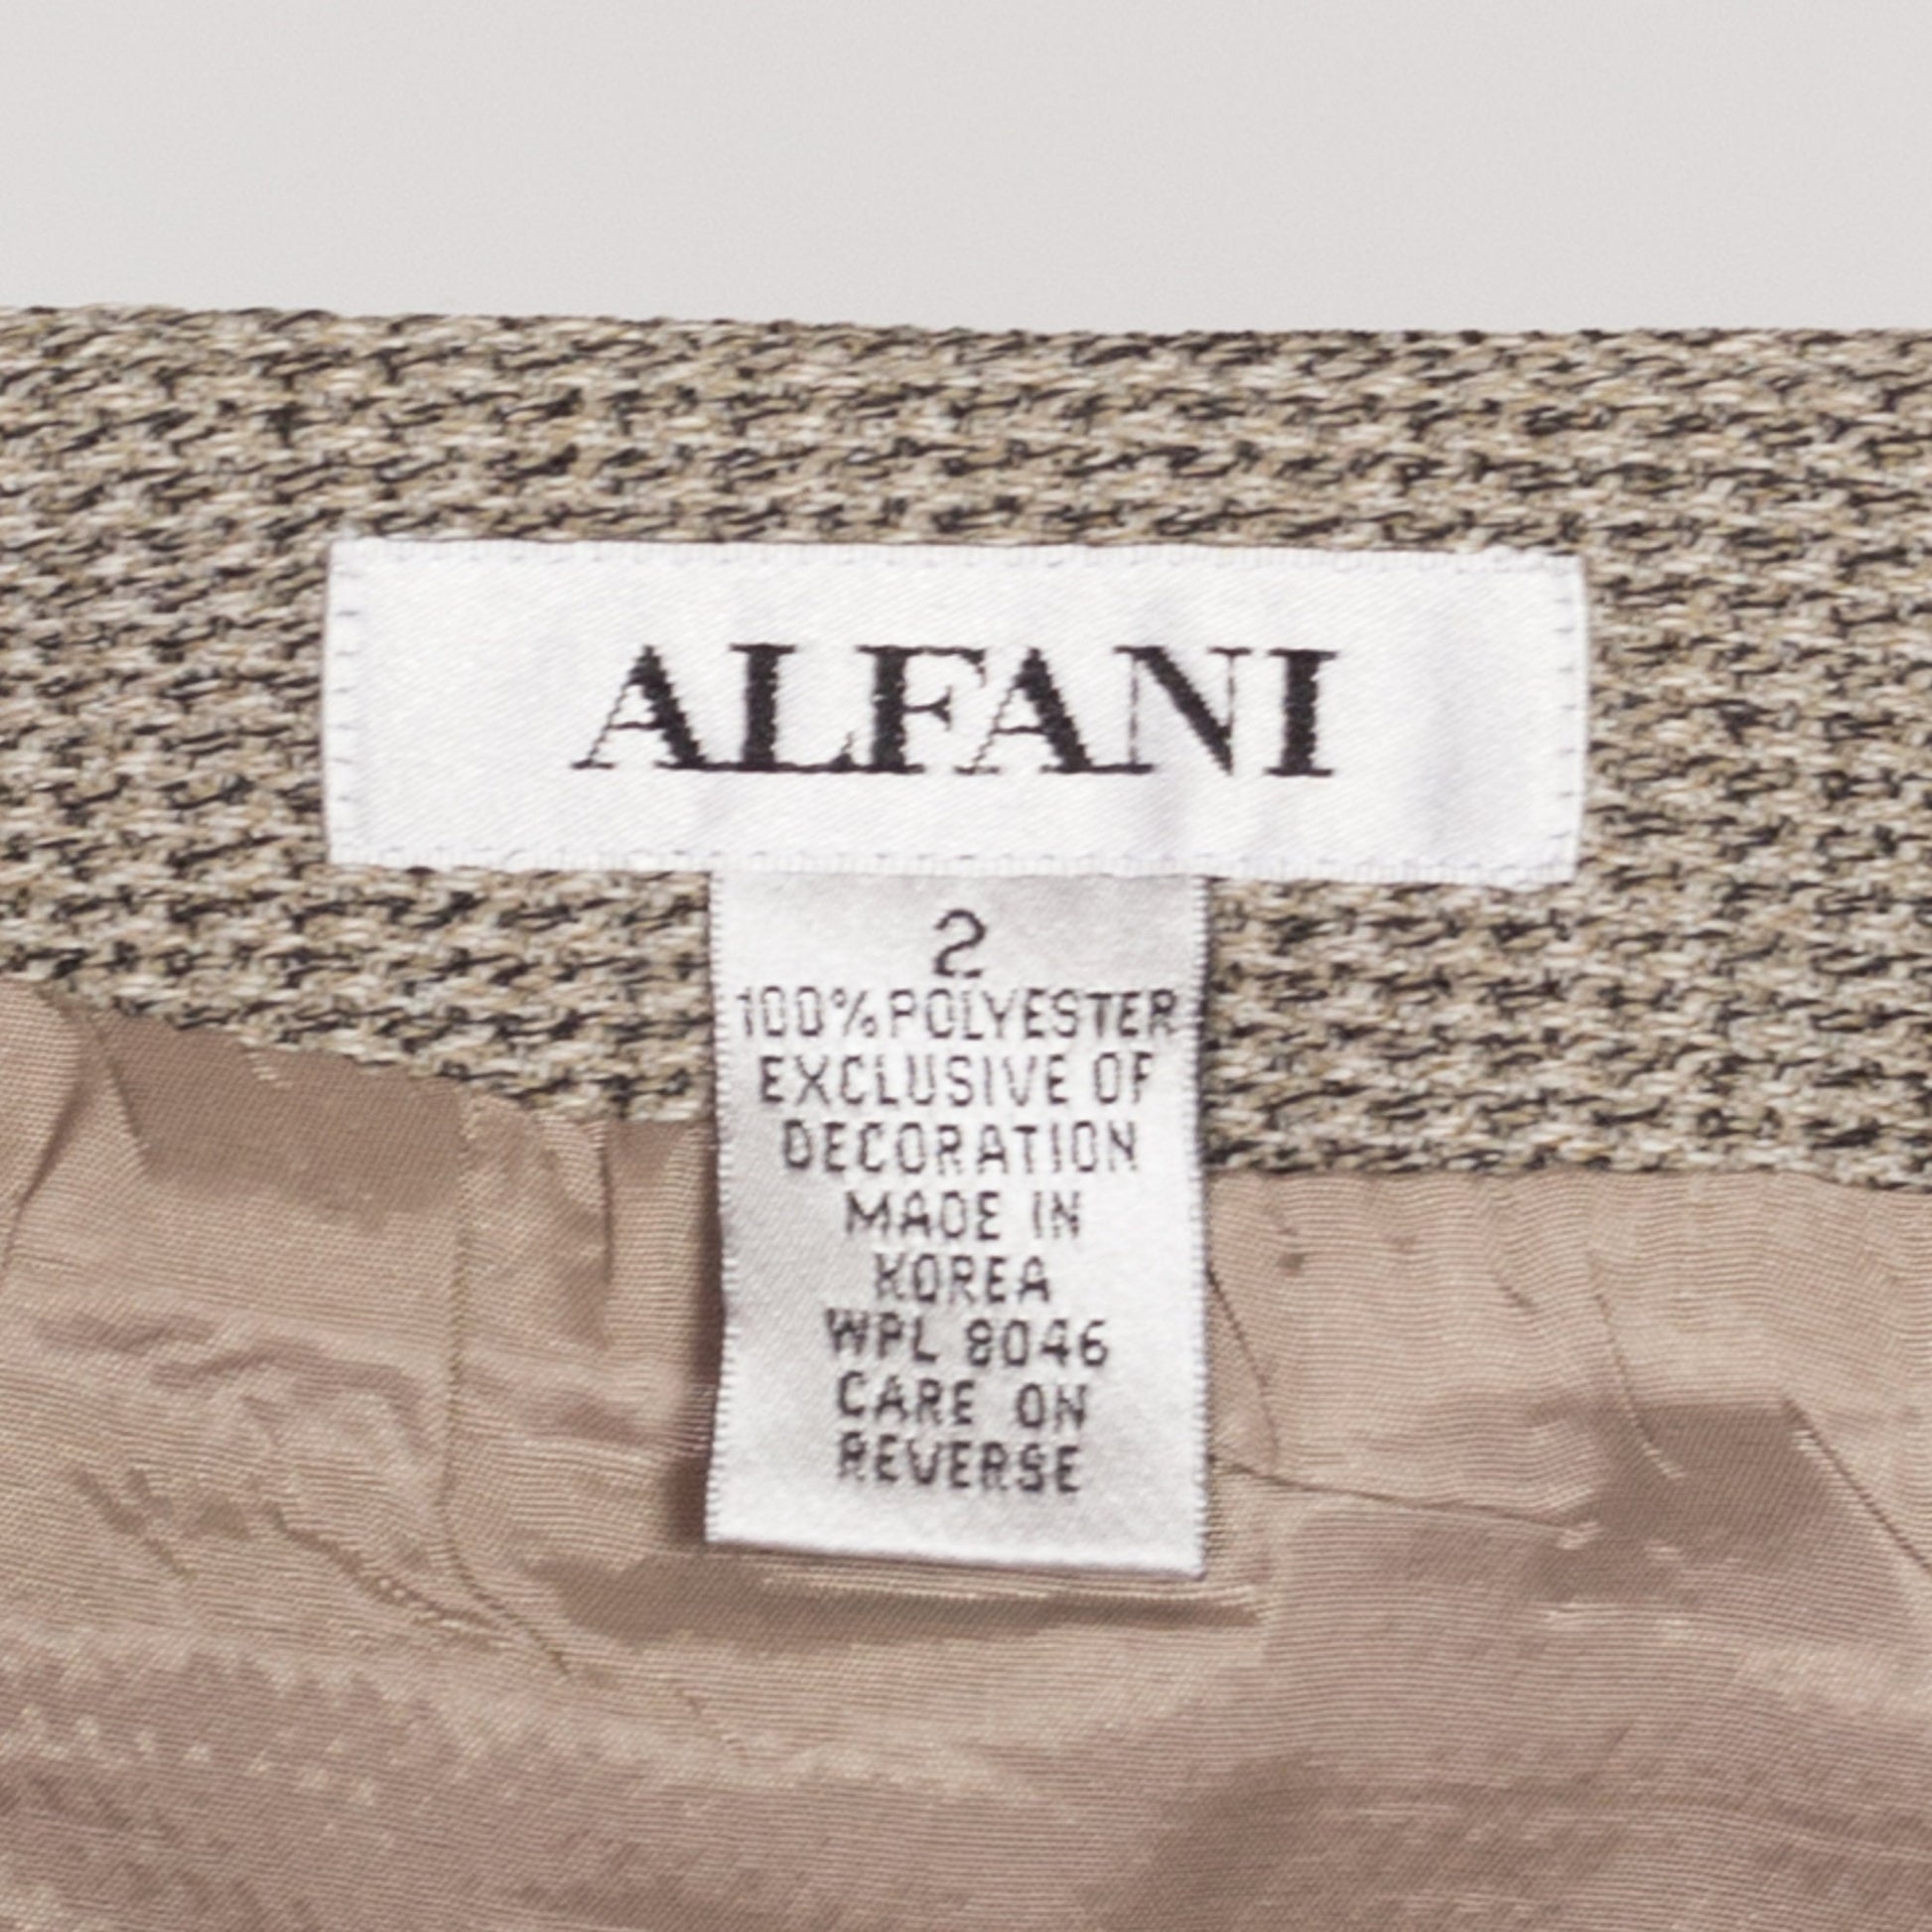 XS 90s Knit Leather Belt Mini Skirt 25" | Vintage Minimalist Two Tone Wrap A Line Miniskirt